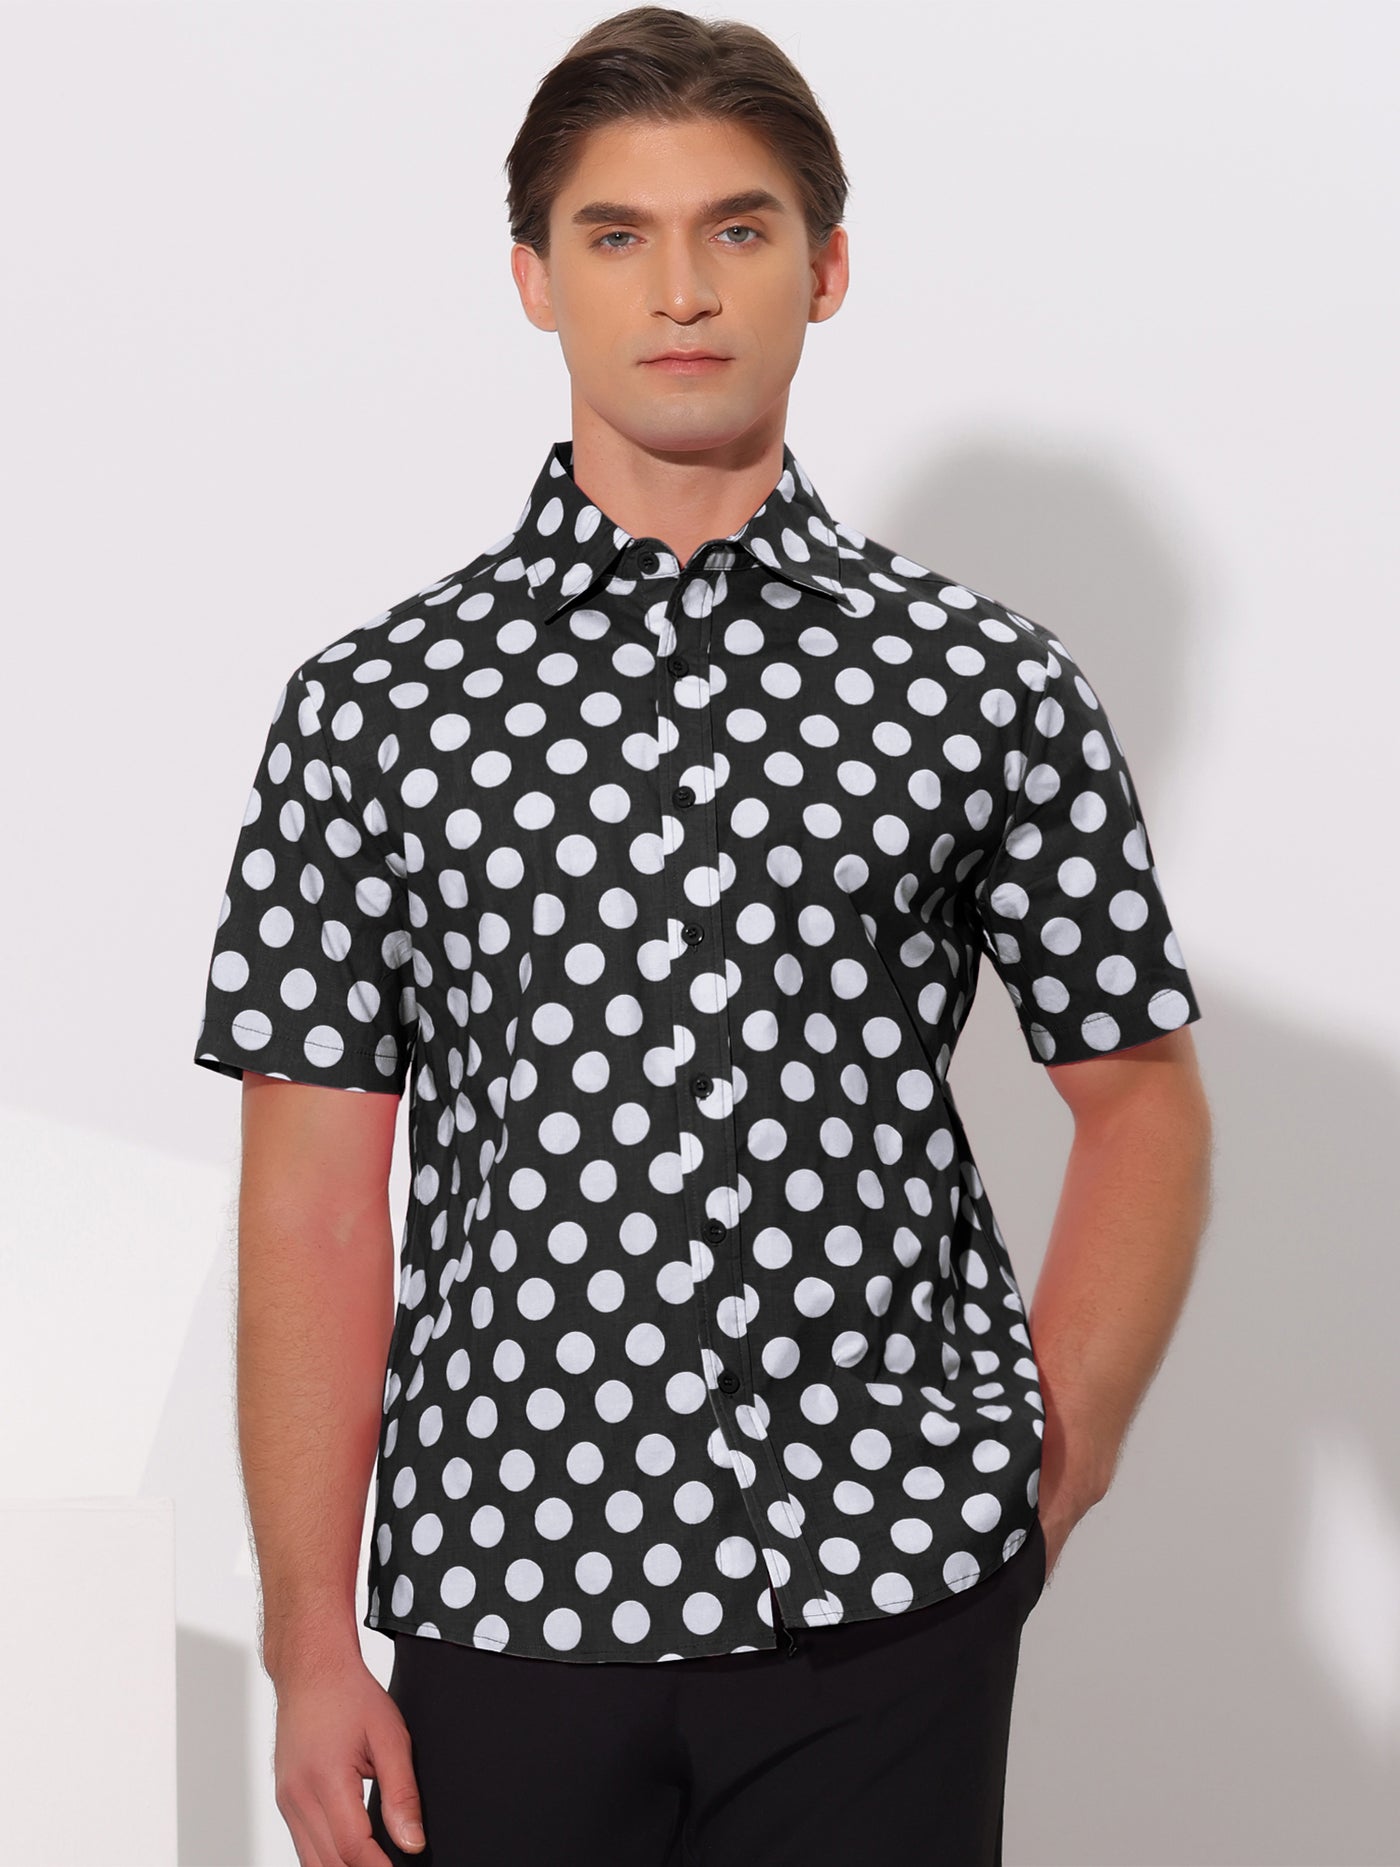 Bublédon Polka Dots Shirt for Men's Summer Short Sleeves Button Printed Dress Shirts